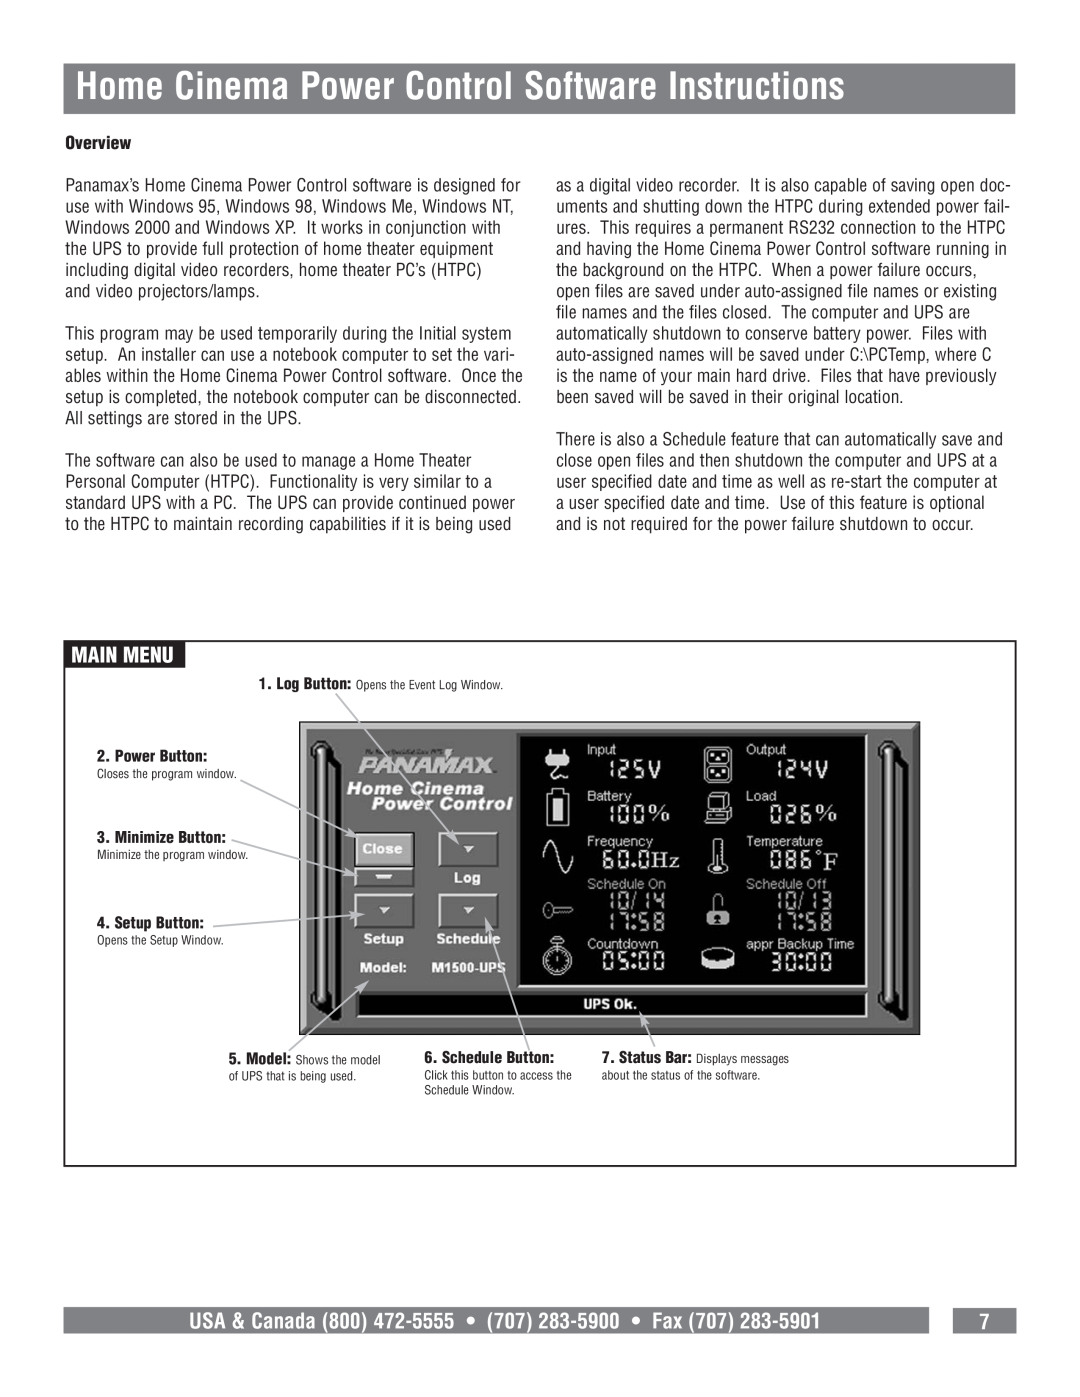 Panamax M1500-UPS Home Cinema Power Control Software Instructions, Main Menu, Overview, Power Button, Minimize Button 